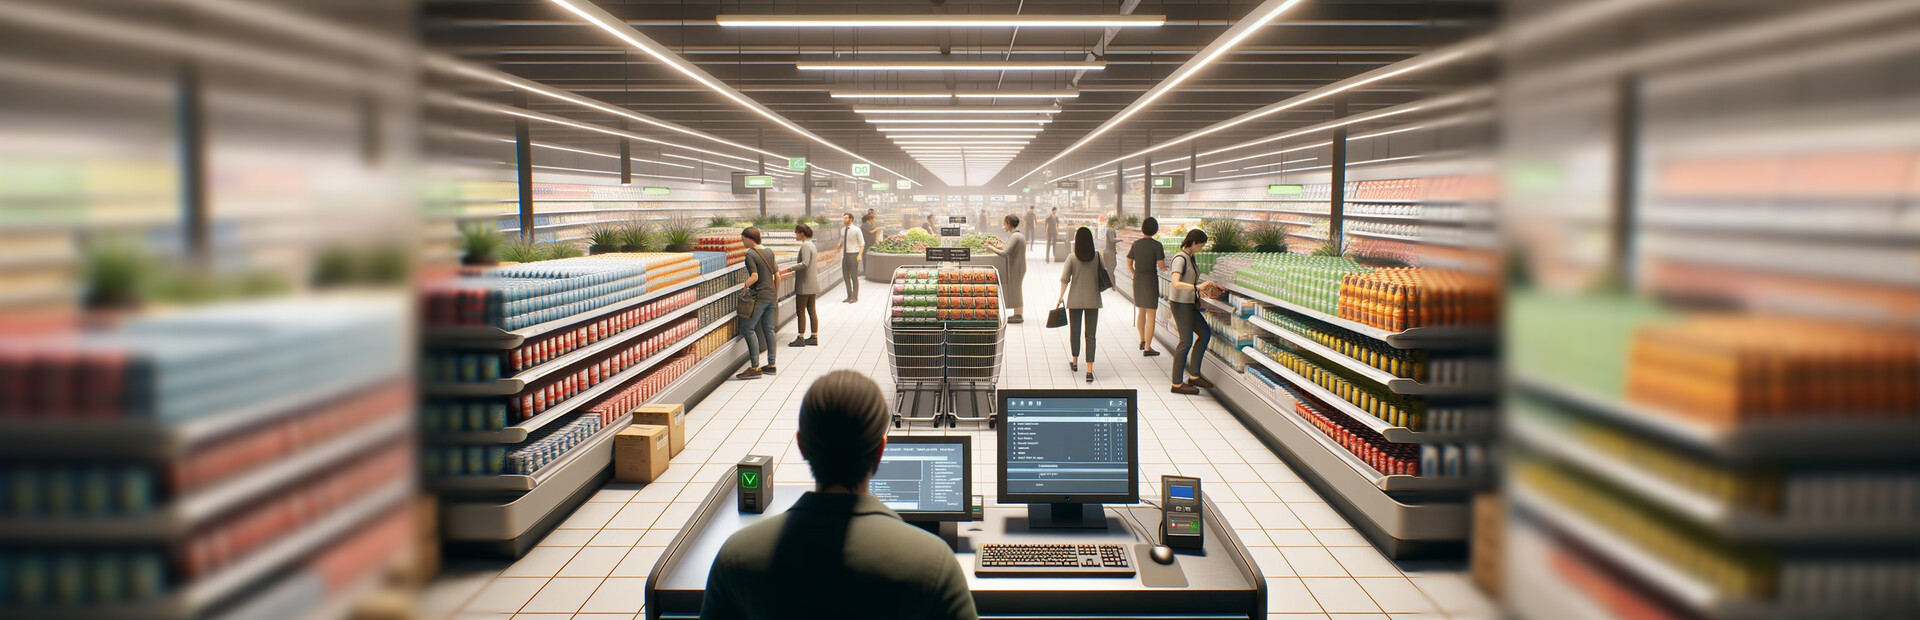 Supermarket Simulator cover image